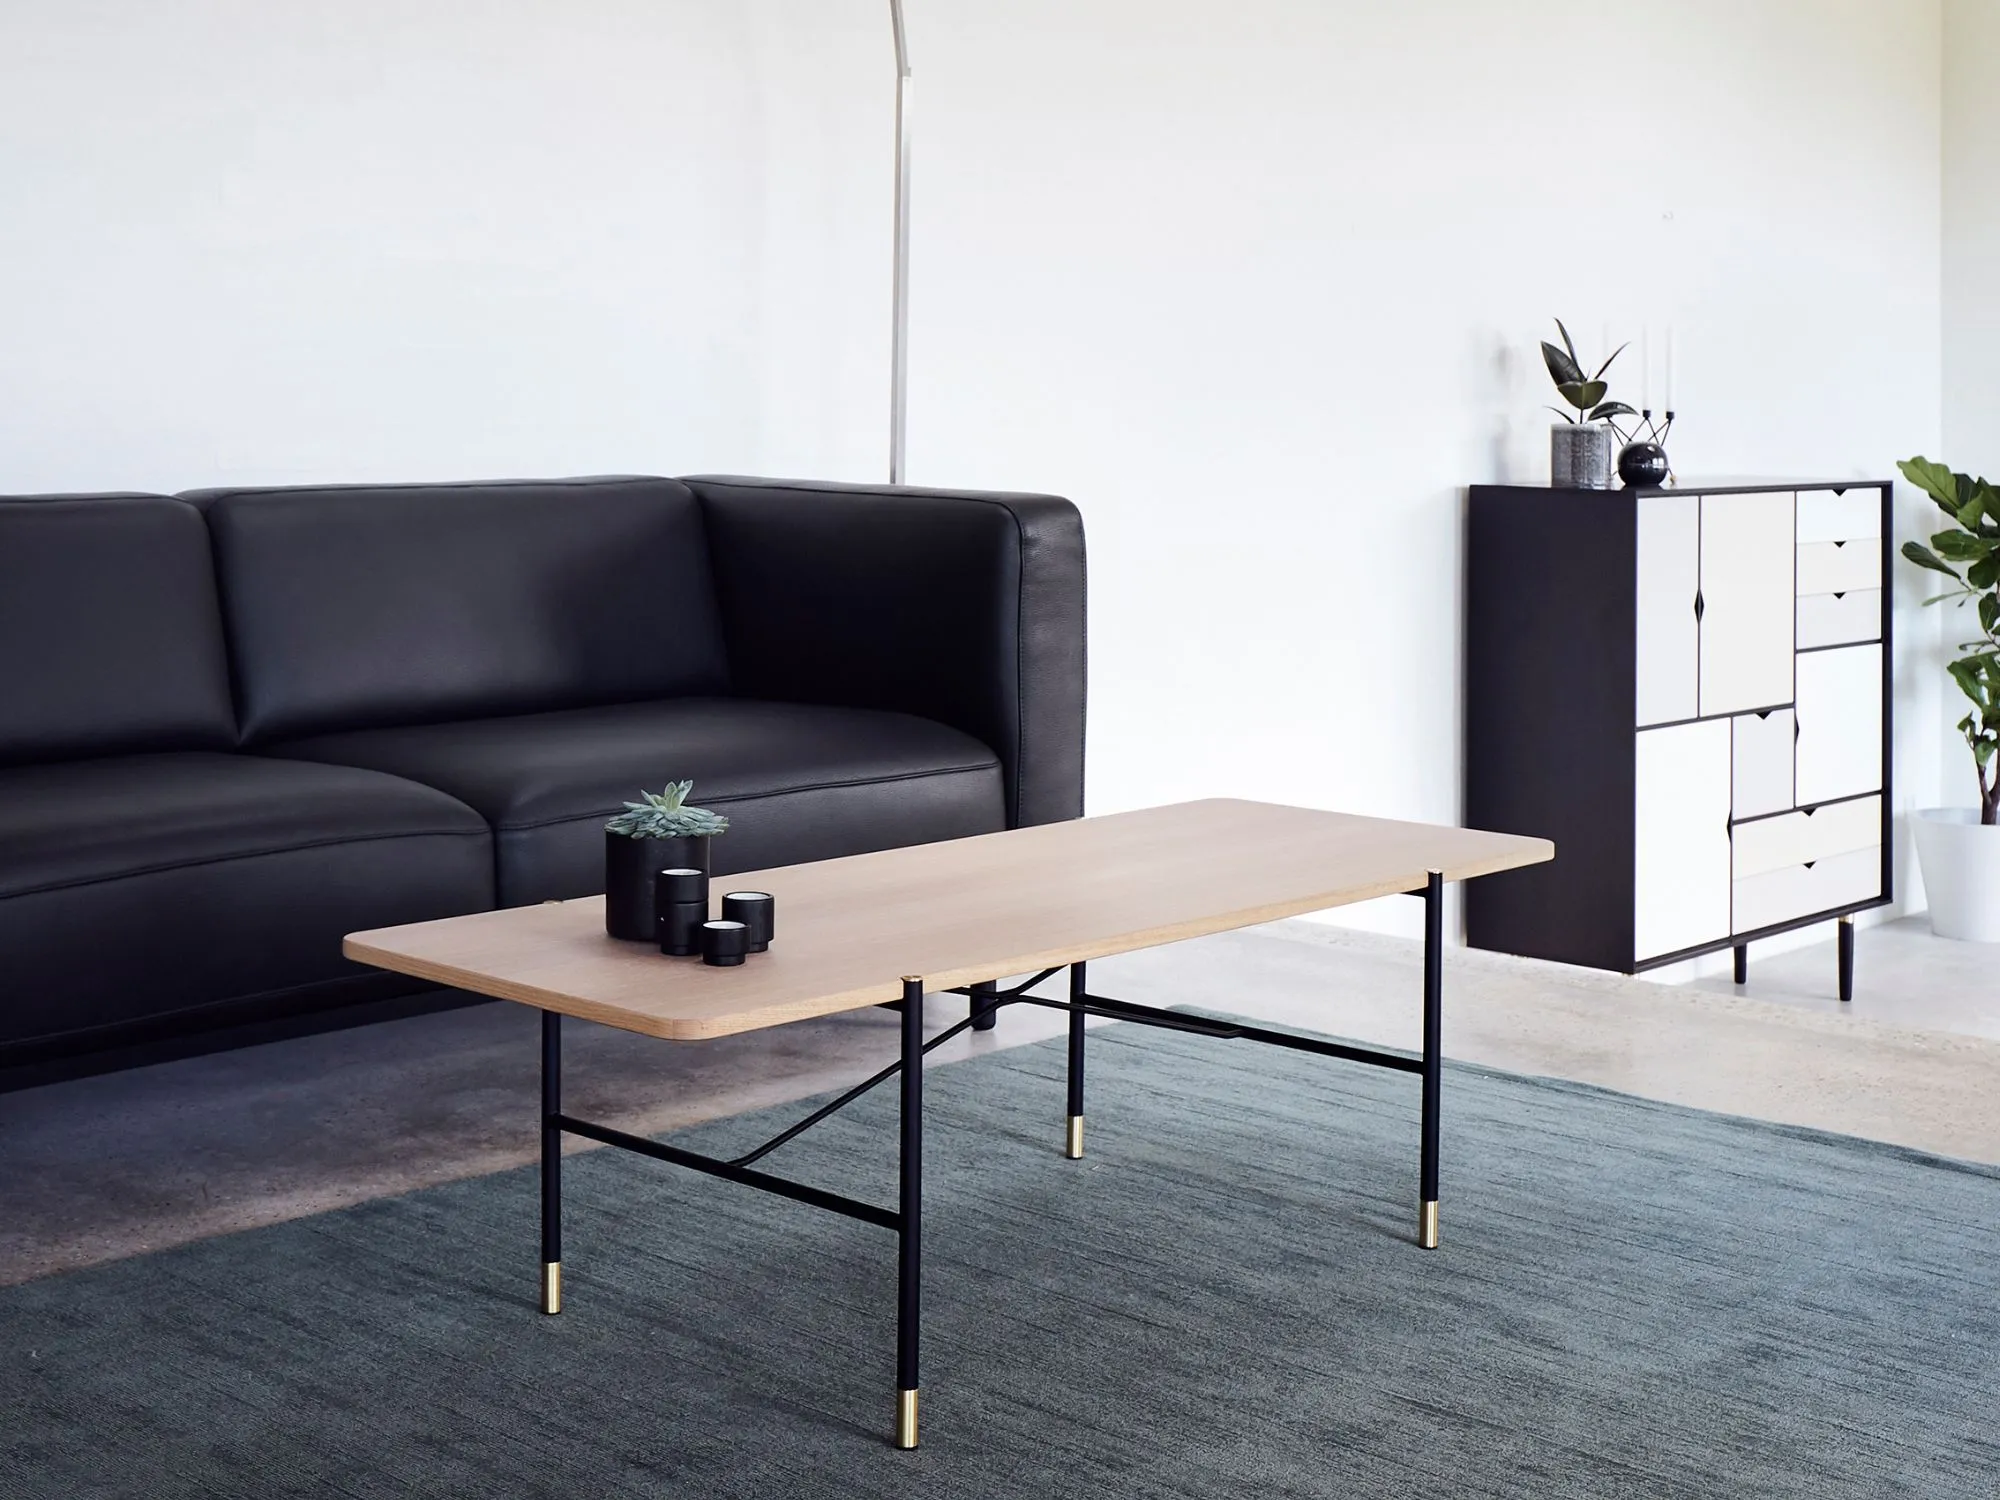 på TILBUD - Andersen Furniture C6 bolighuset.dk